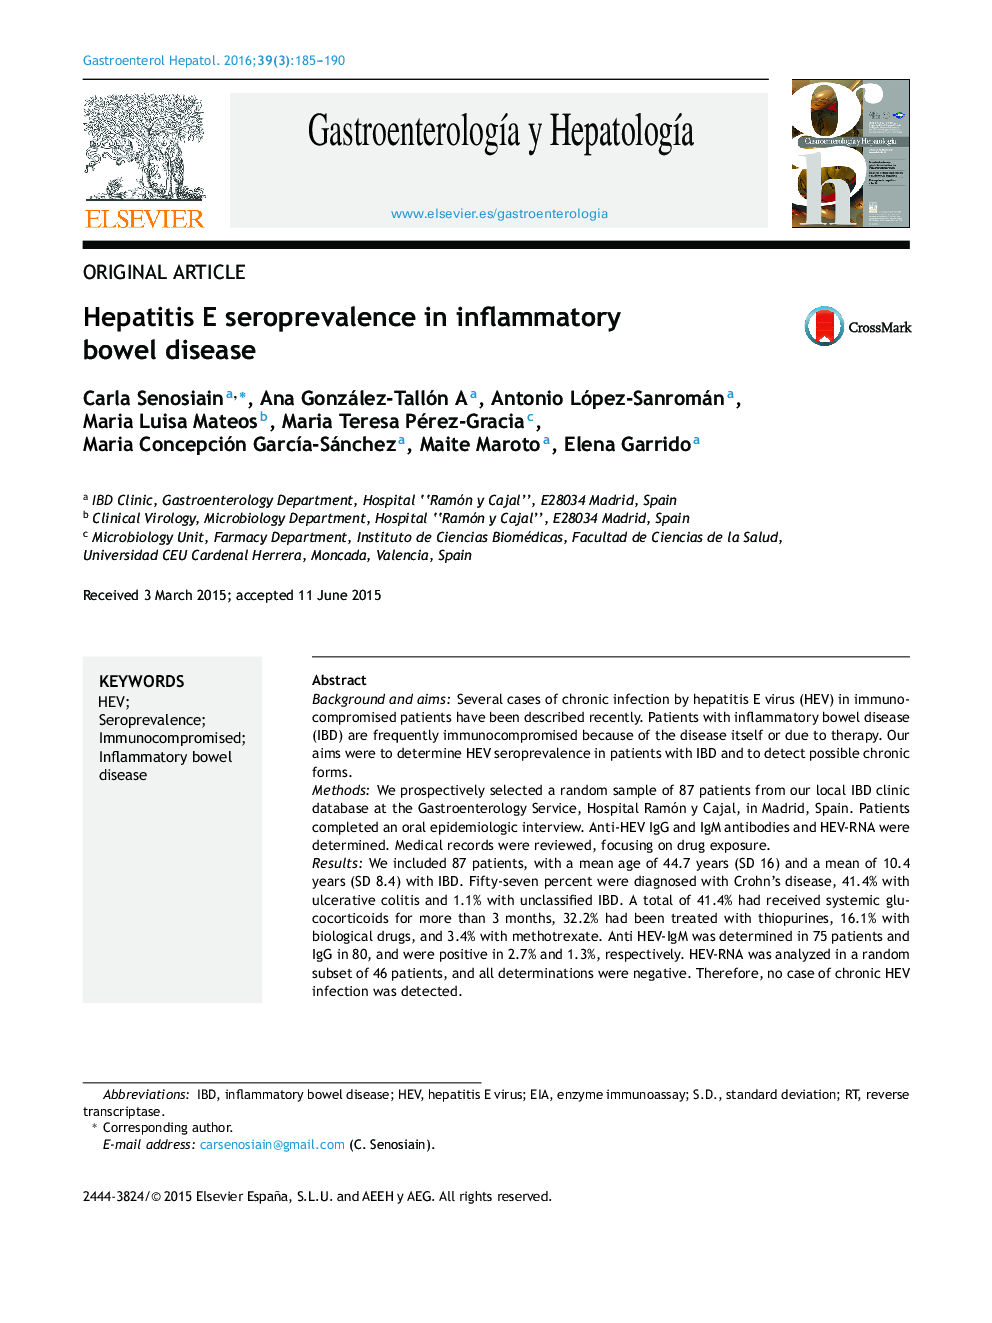 Hepatitis e seroprevalence in inflammatory bowel disease